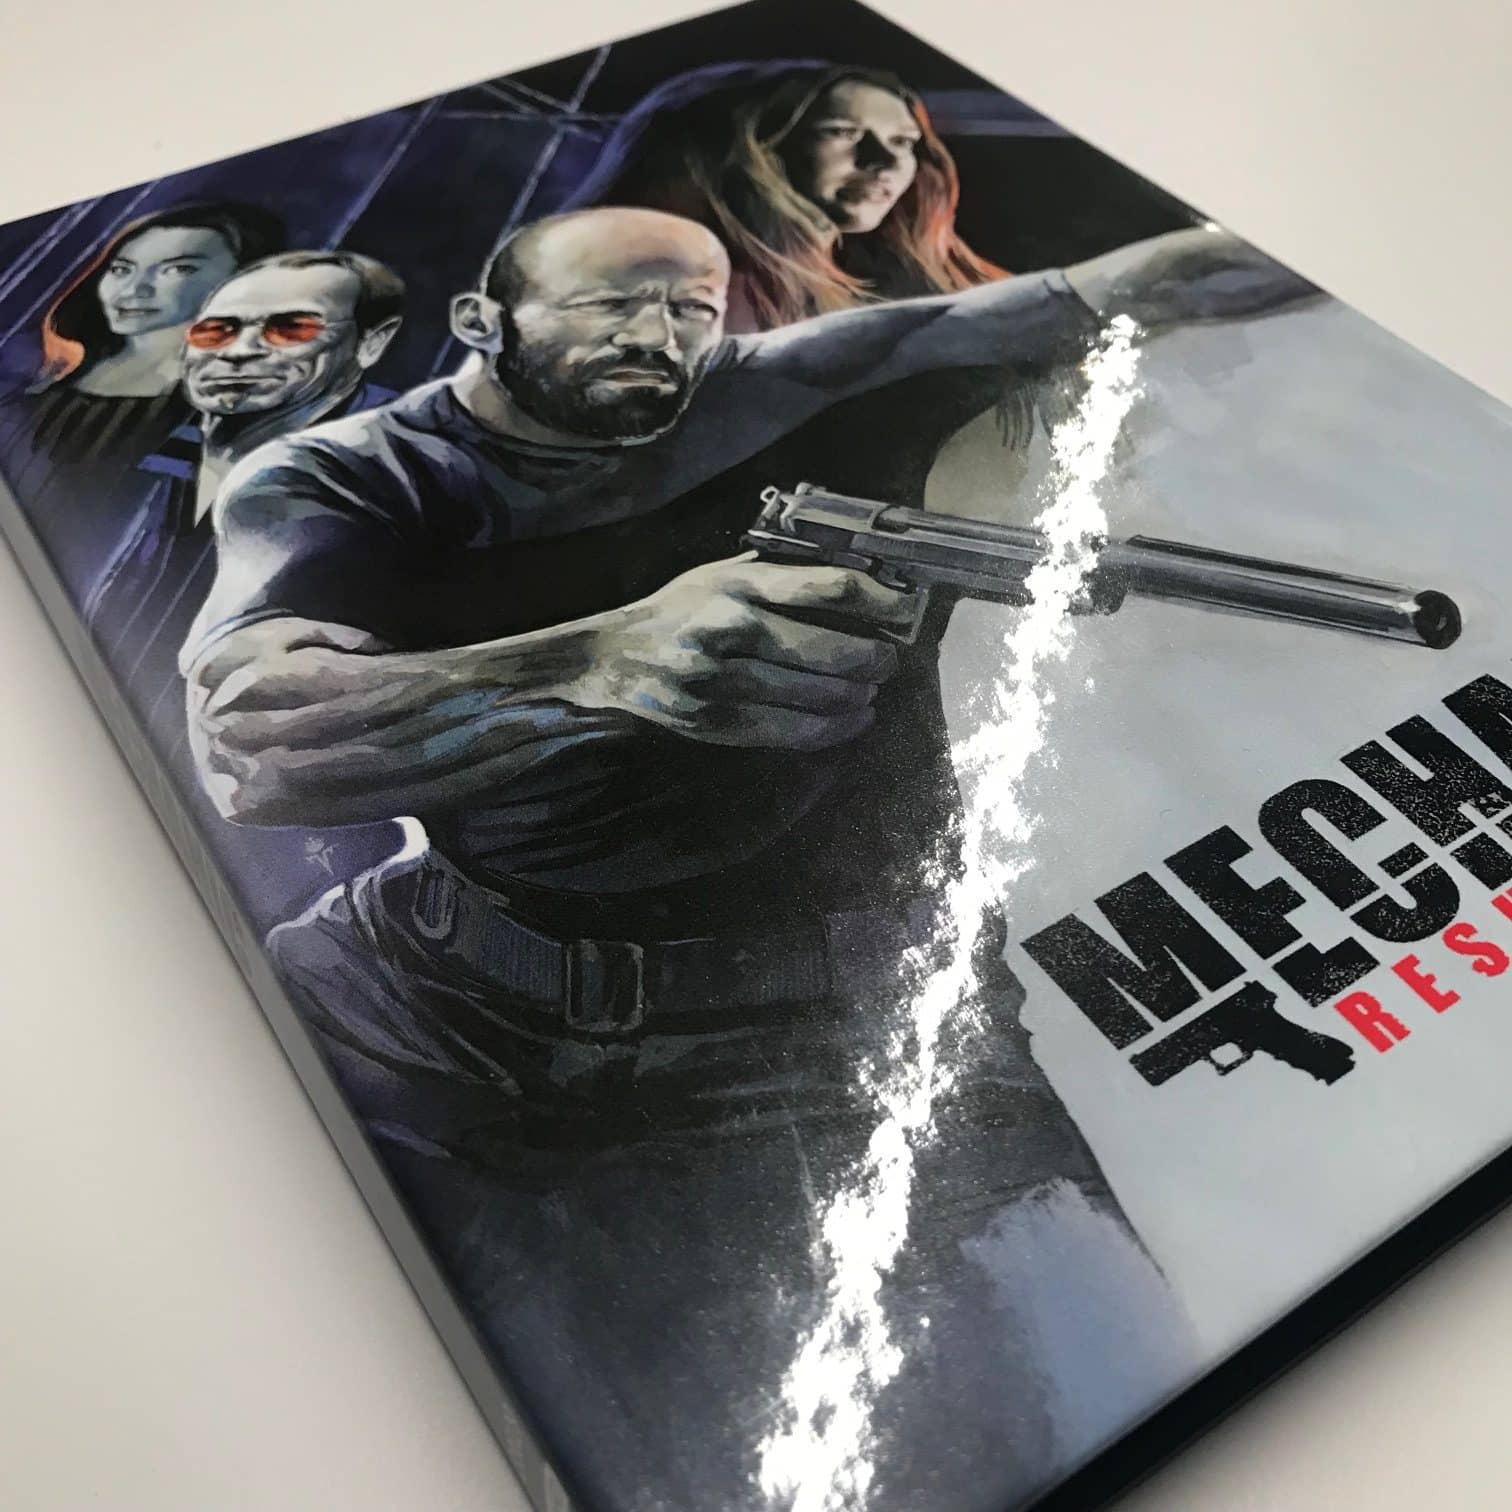 [Review] Mechanic: Resurrection im 4K-UHD-Mediabook (inkl. Blu-ray)